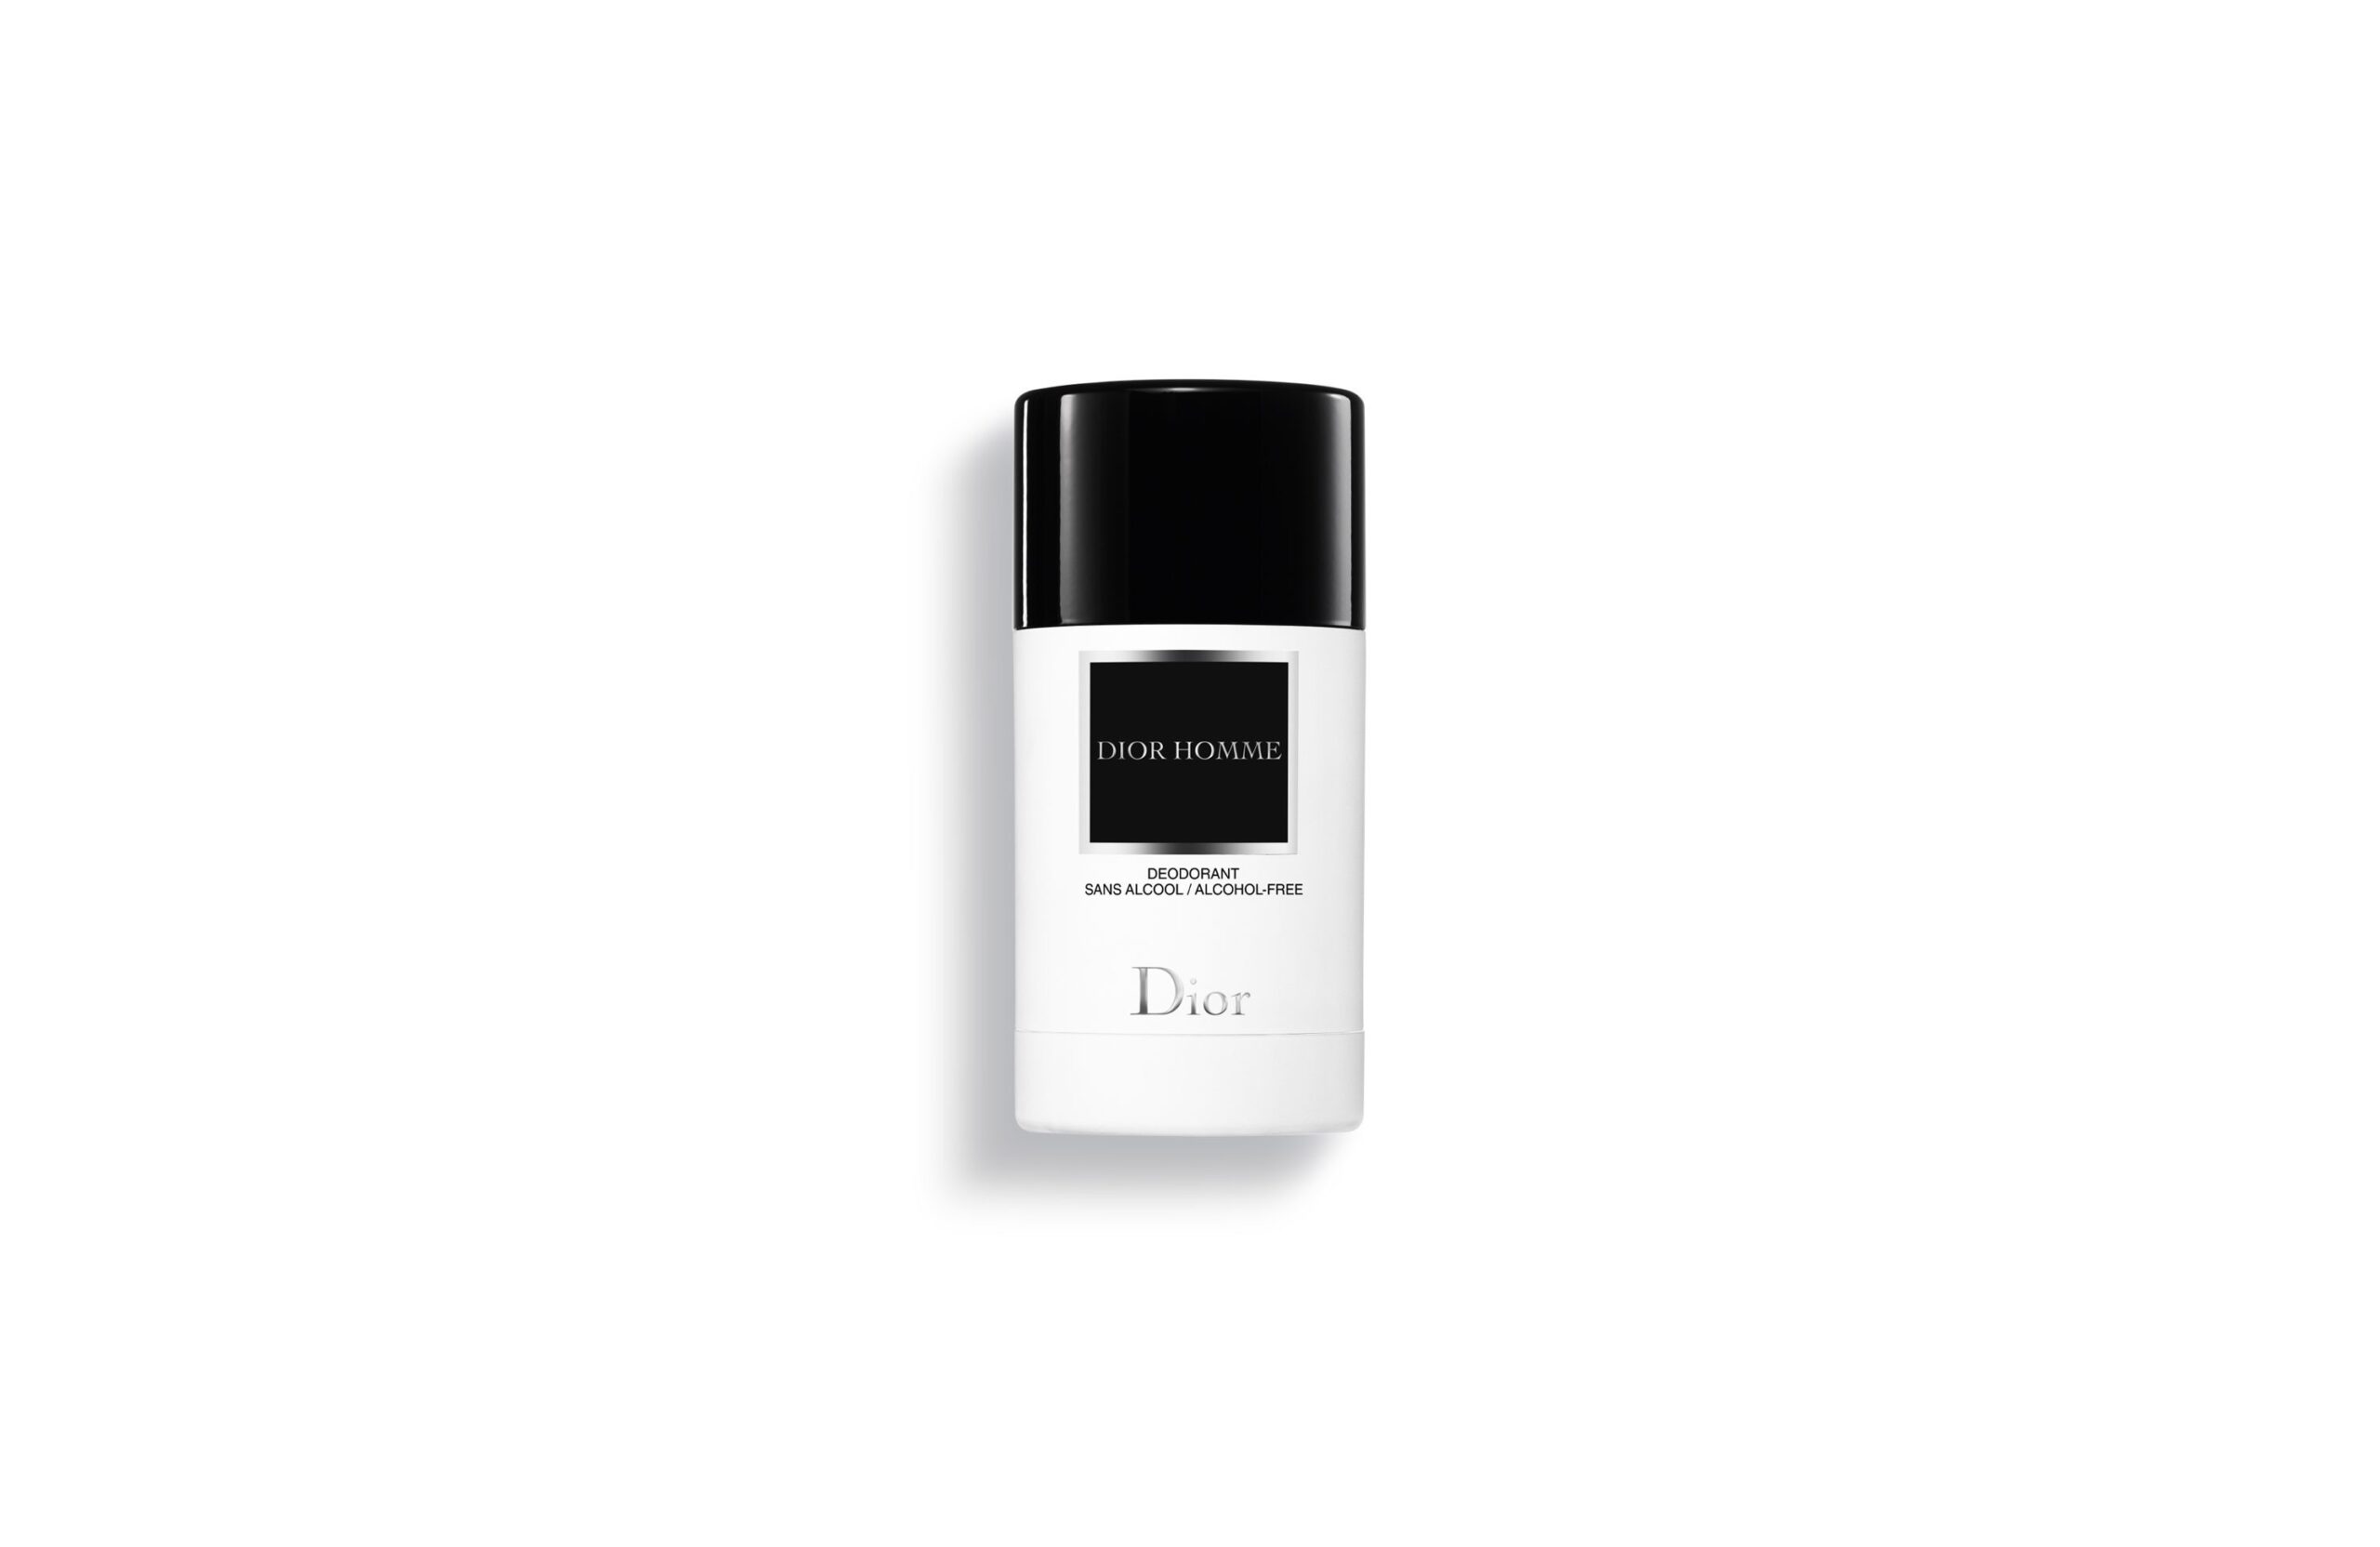 Dior Homme Deodorant Stick 75 g